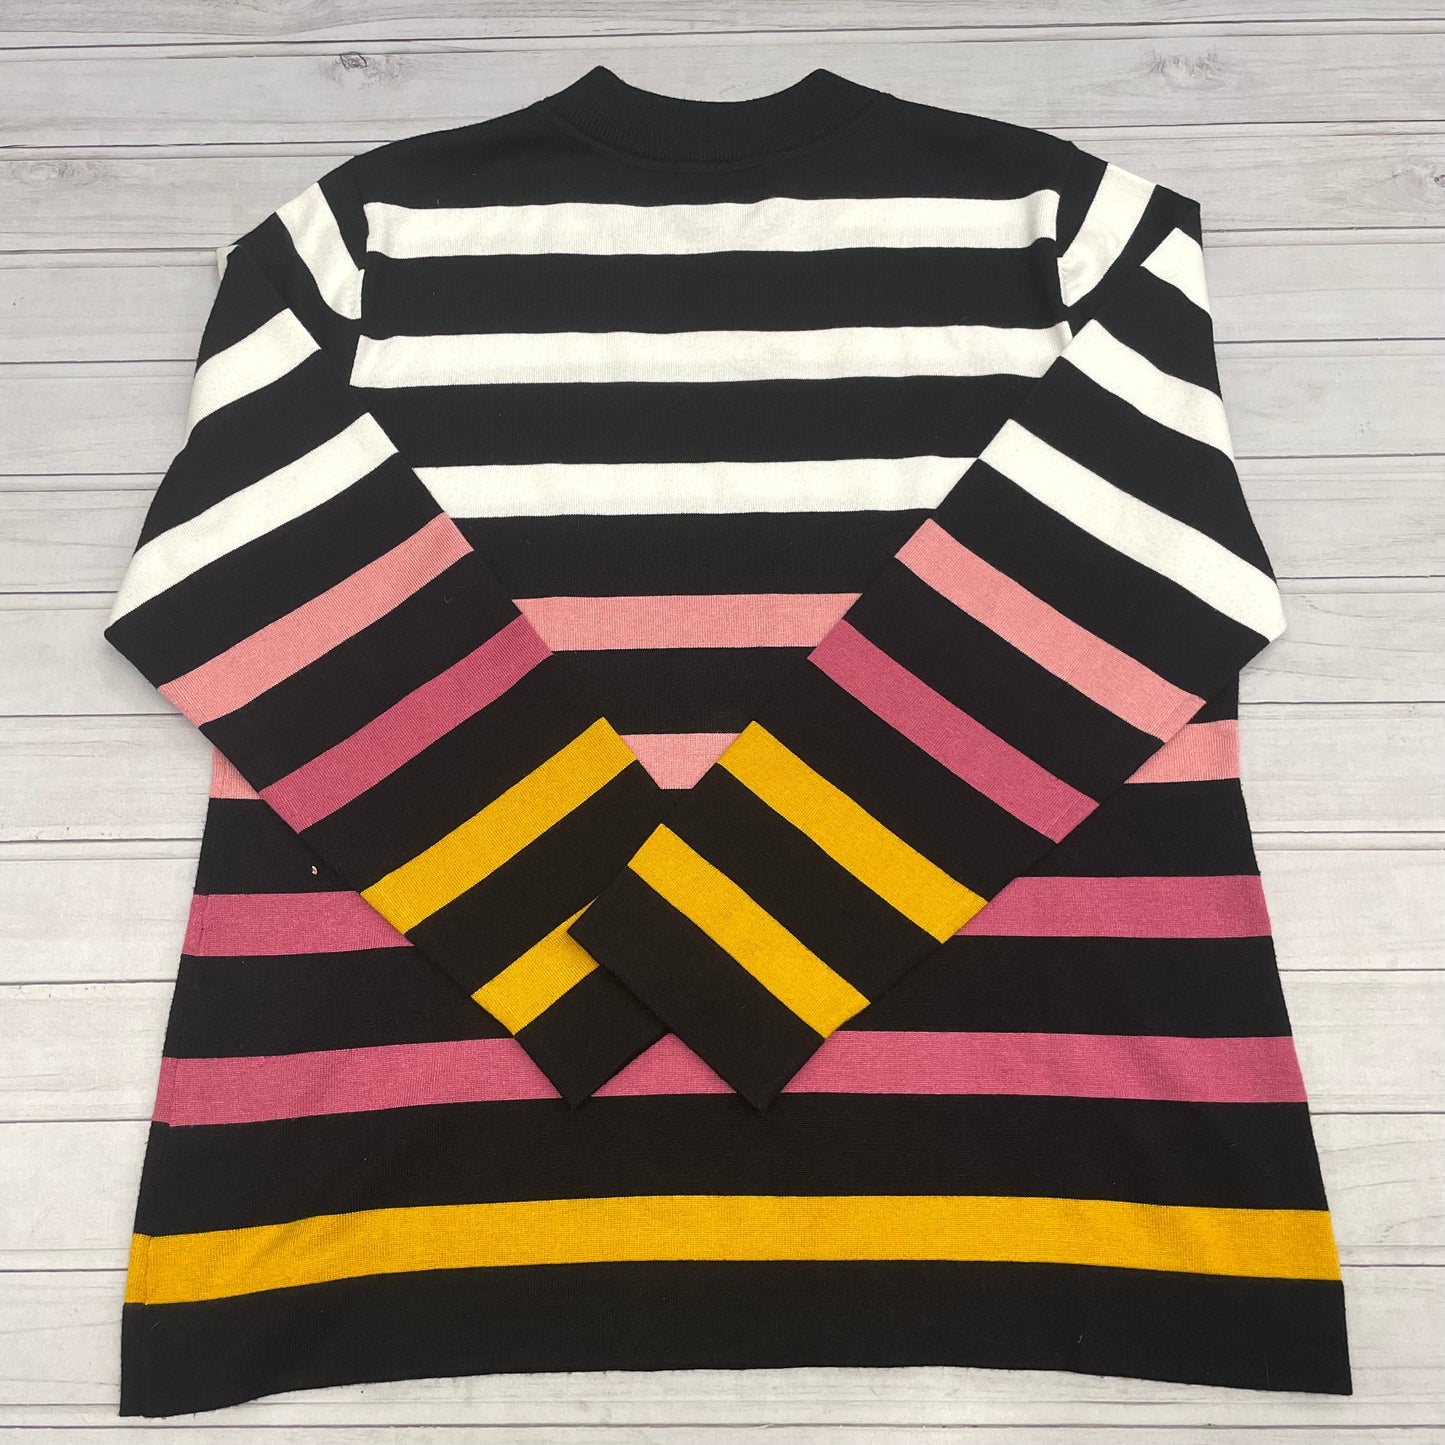 Sweater By Karl Lagerfeld  Size: Xl